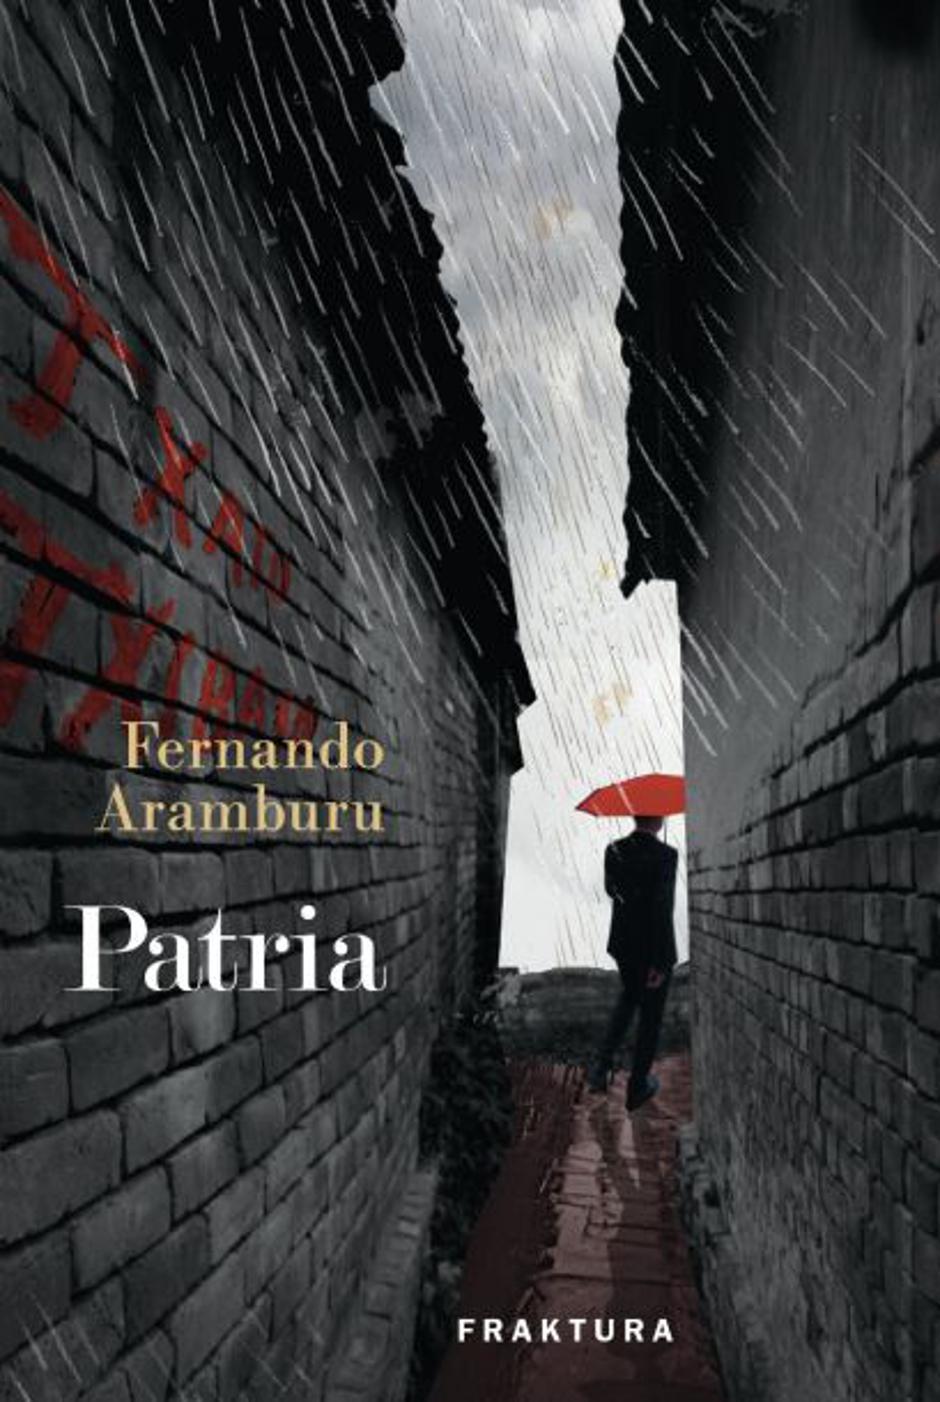 "Patria", Fernando Aramburu | Author: Fraktura